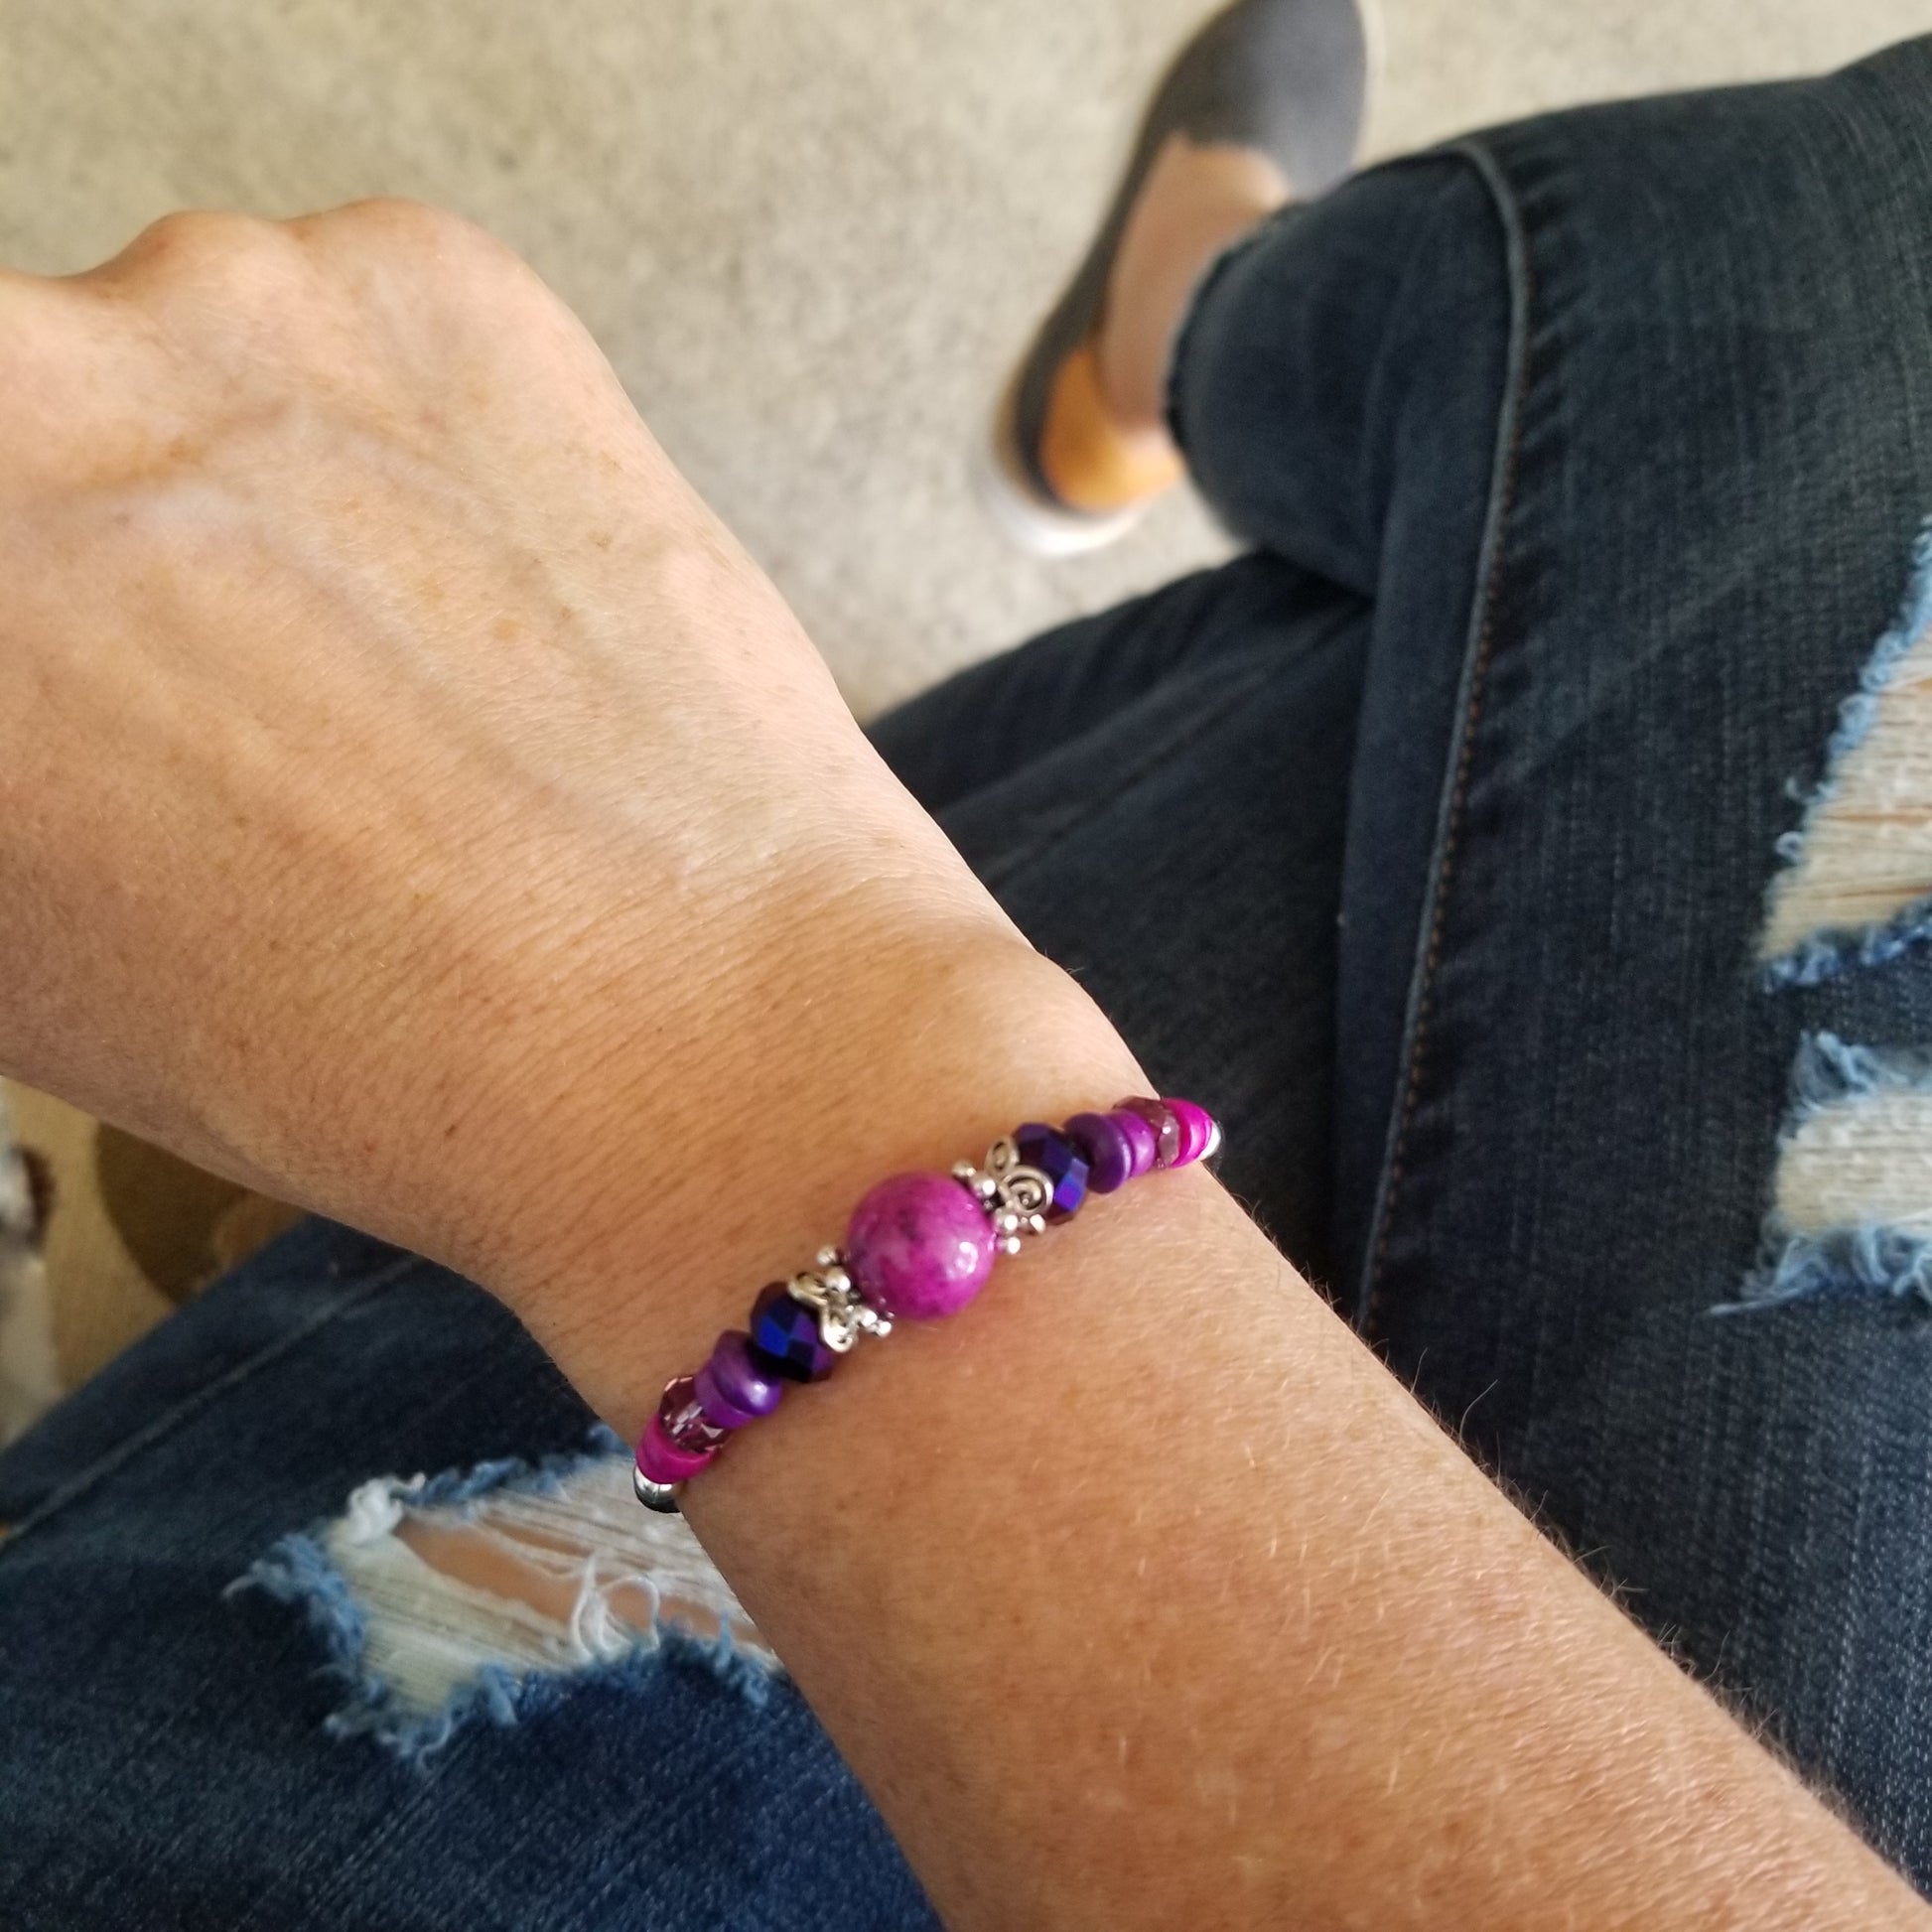 plum Riverstone with coordinating beads wrap bracelet on wrist